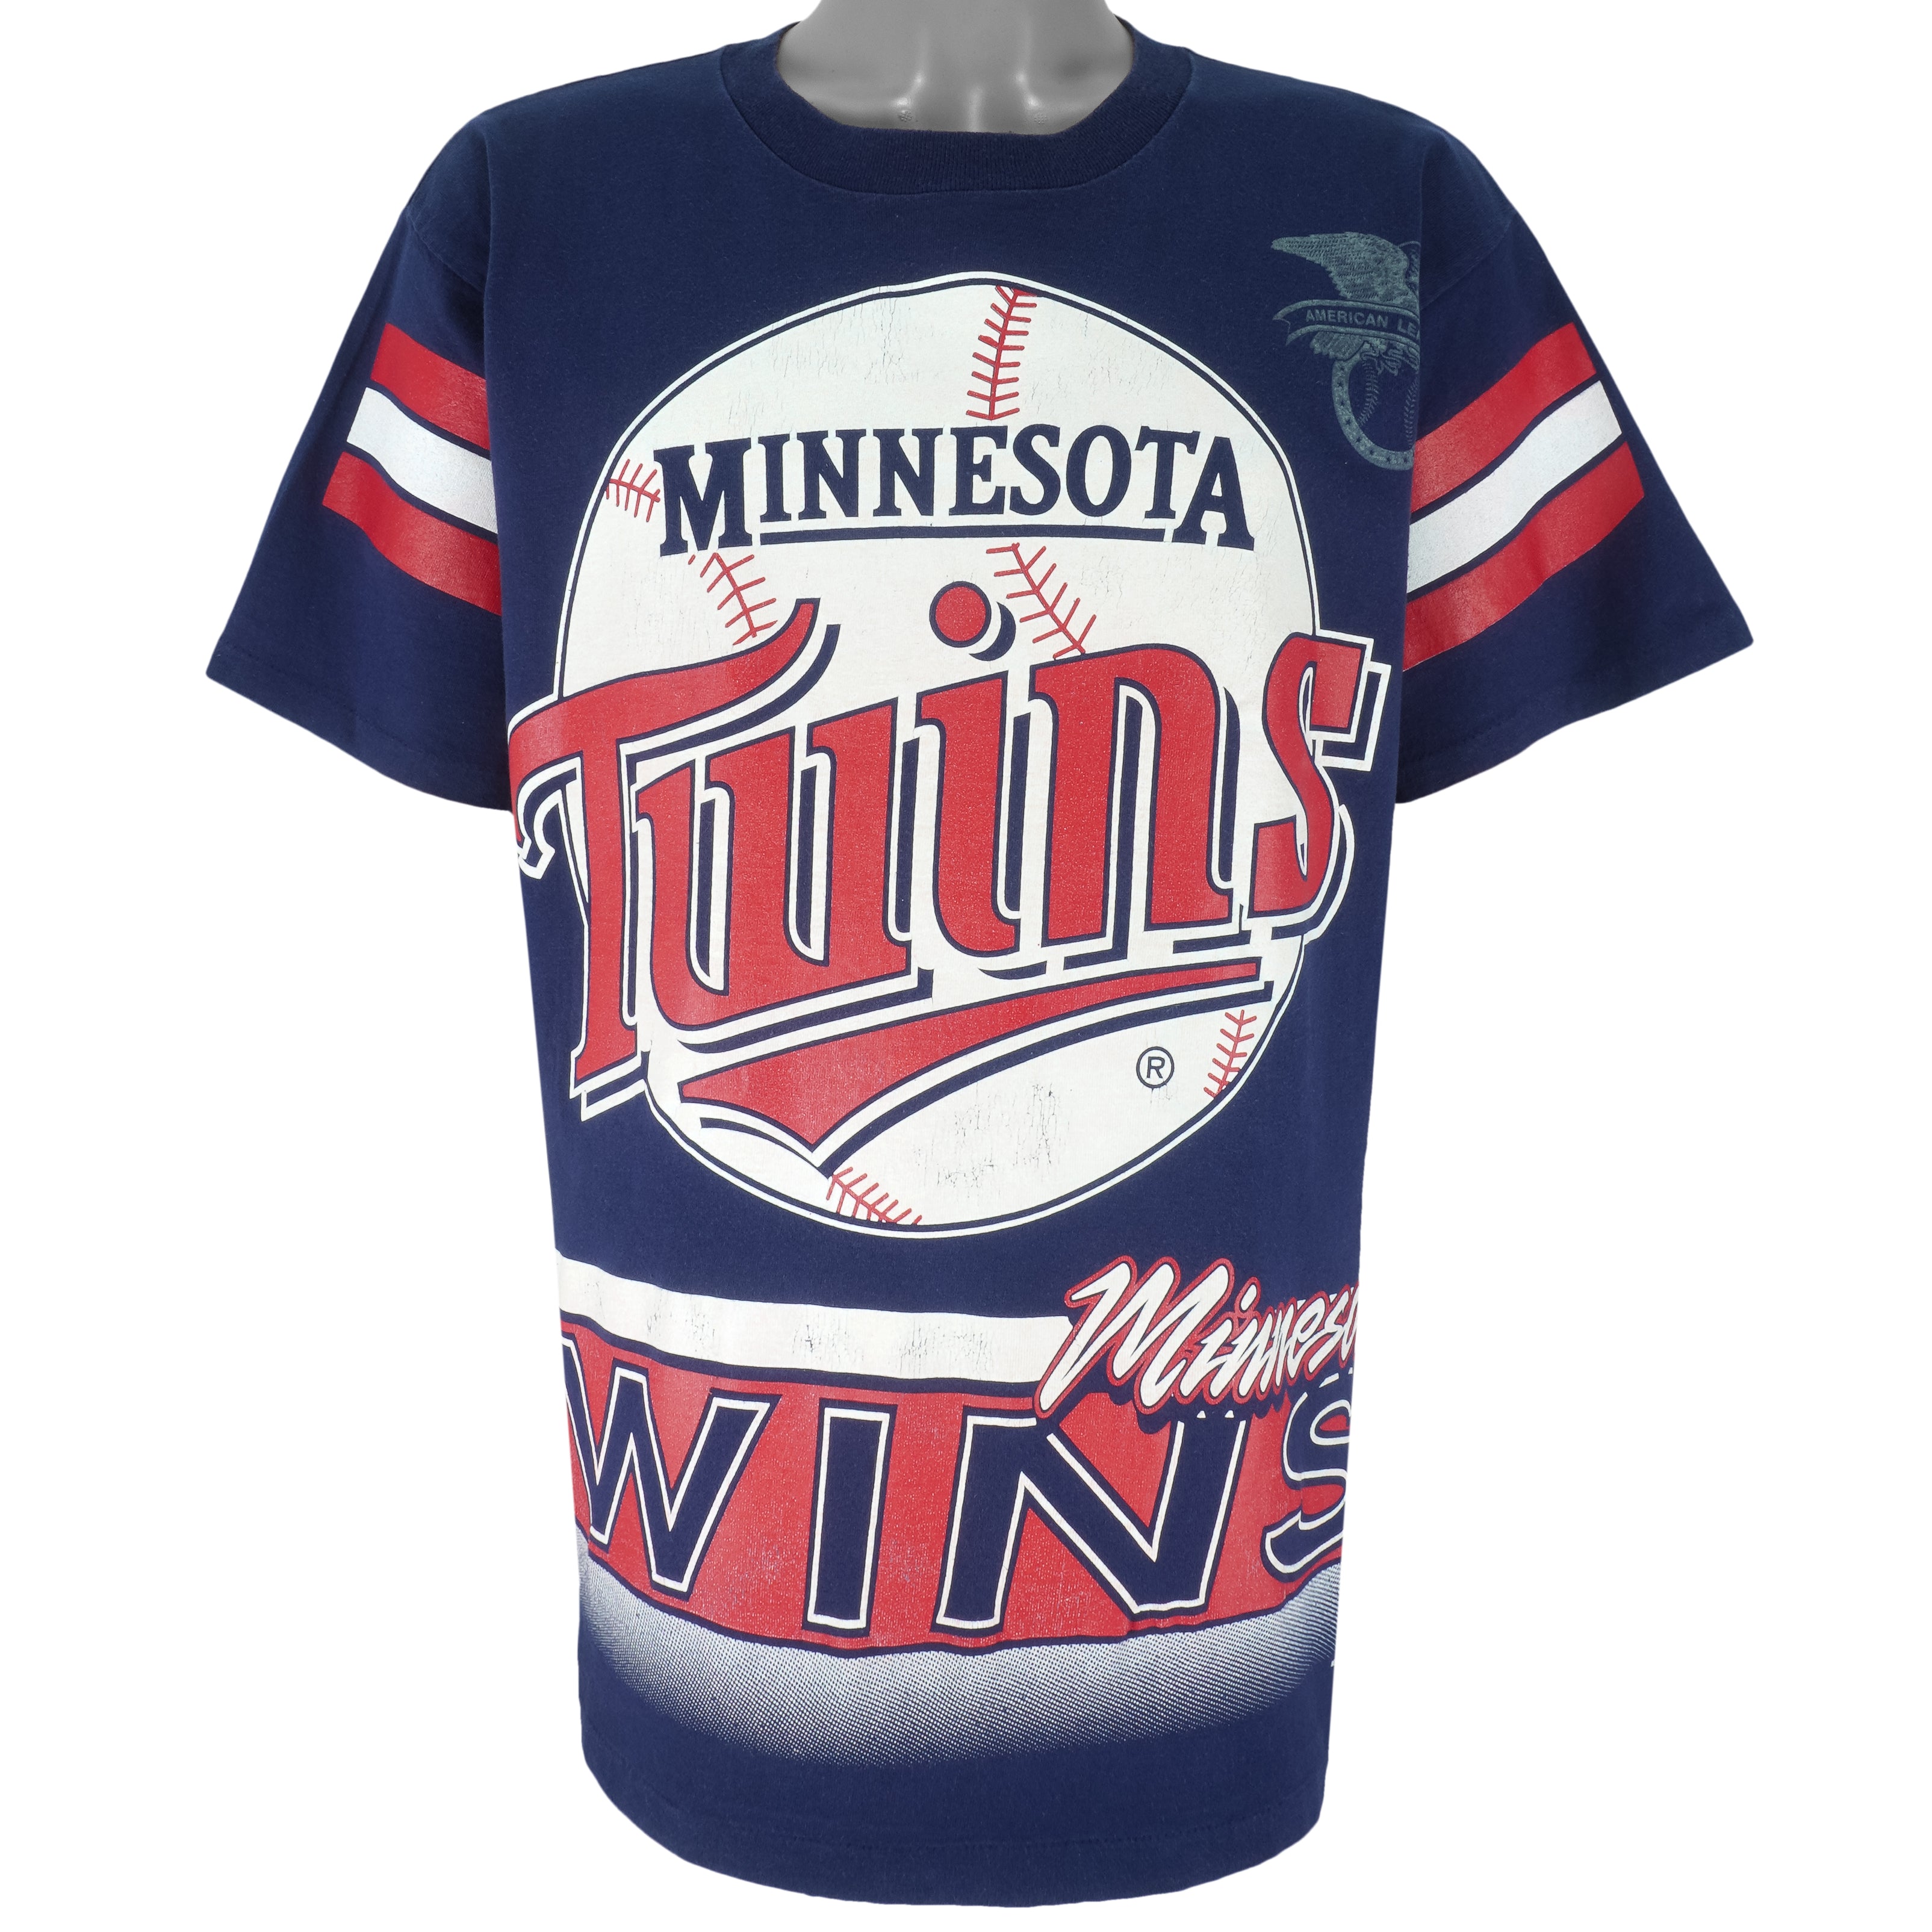 1990 Vintage Minnesota Twins T-Shirt